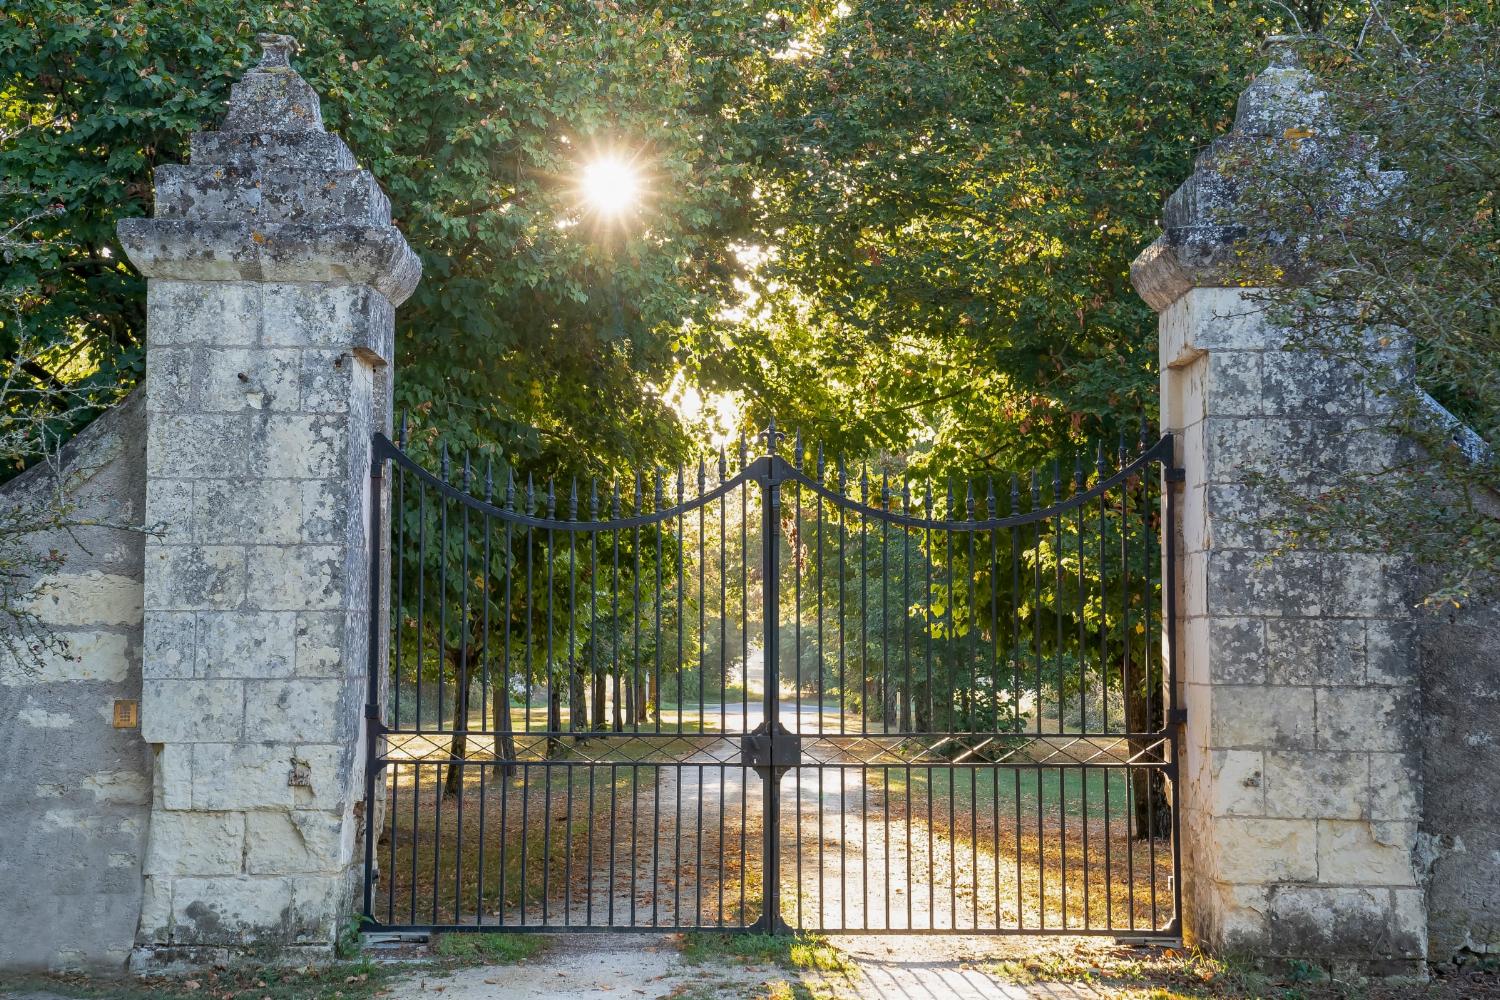 Entrance gates